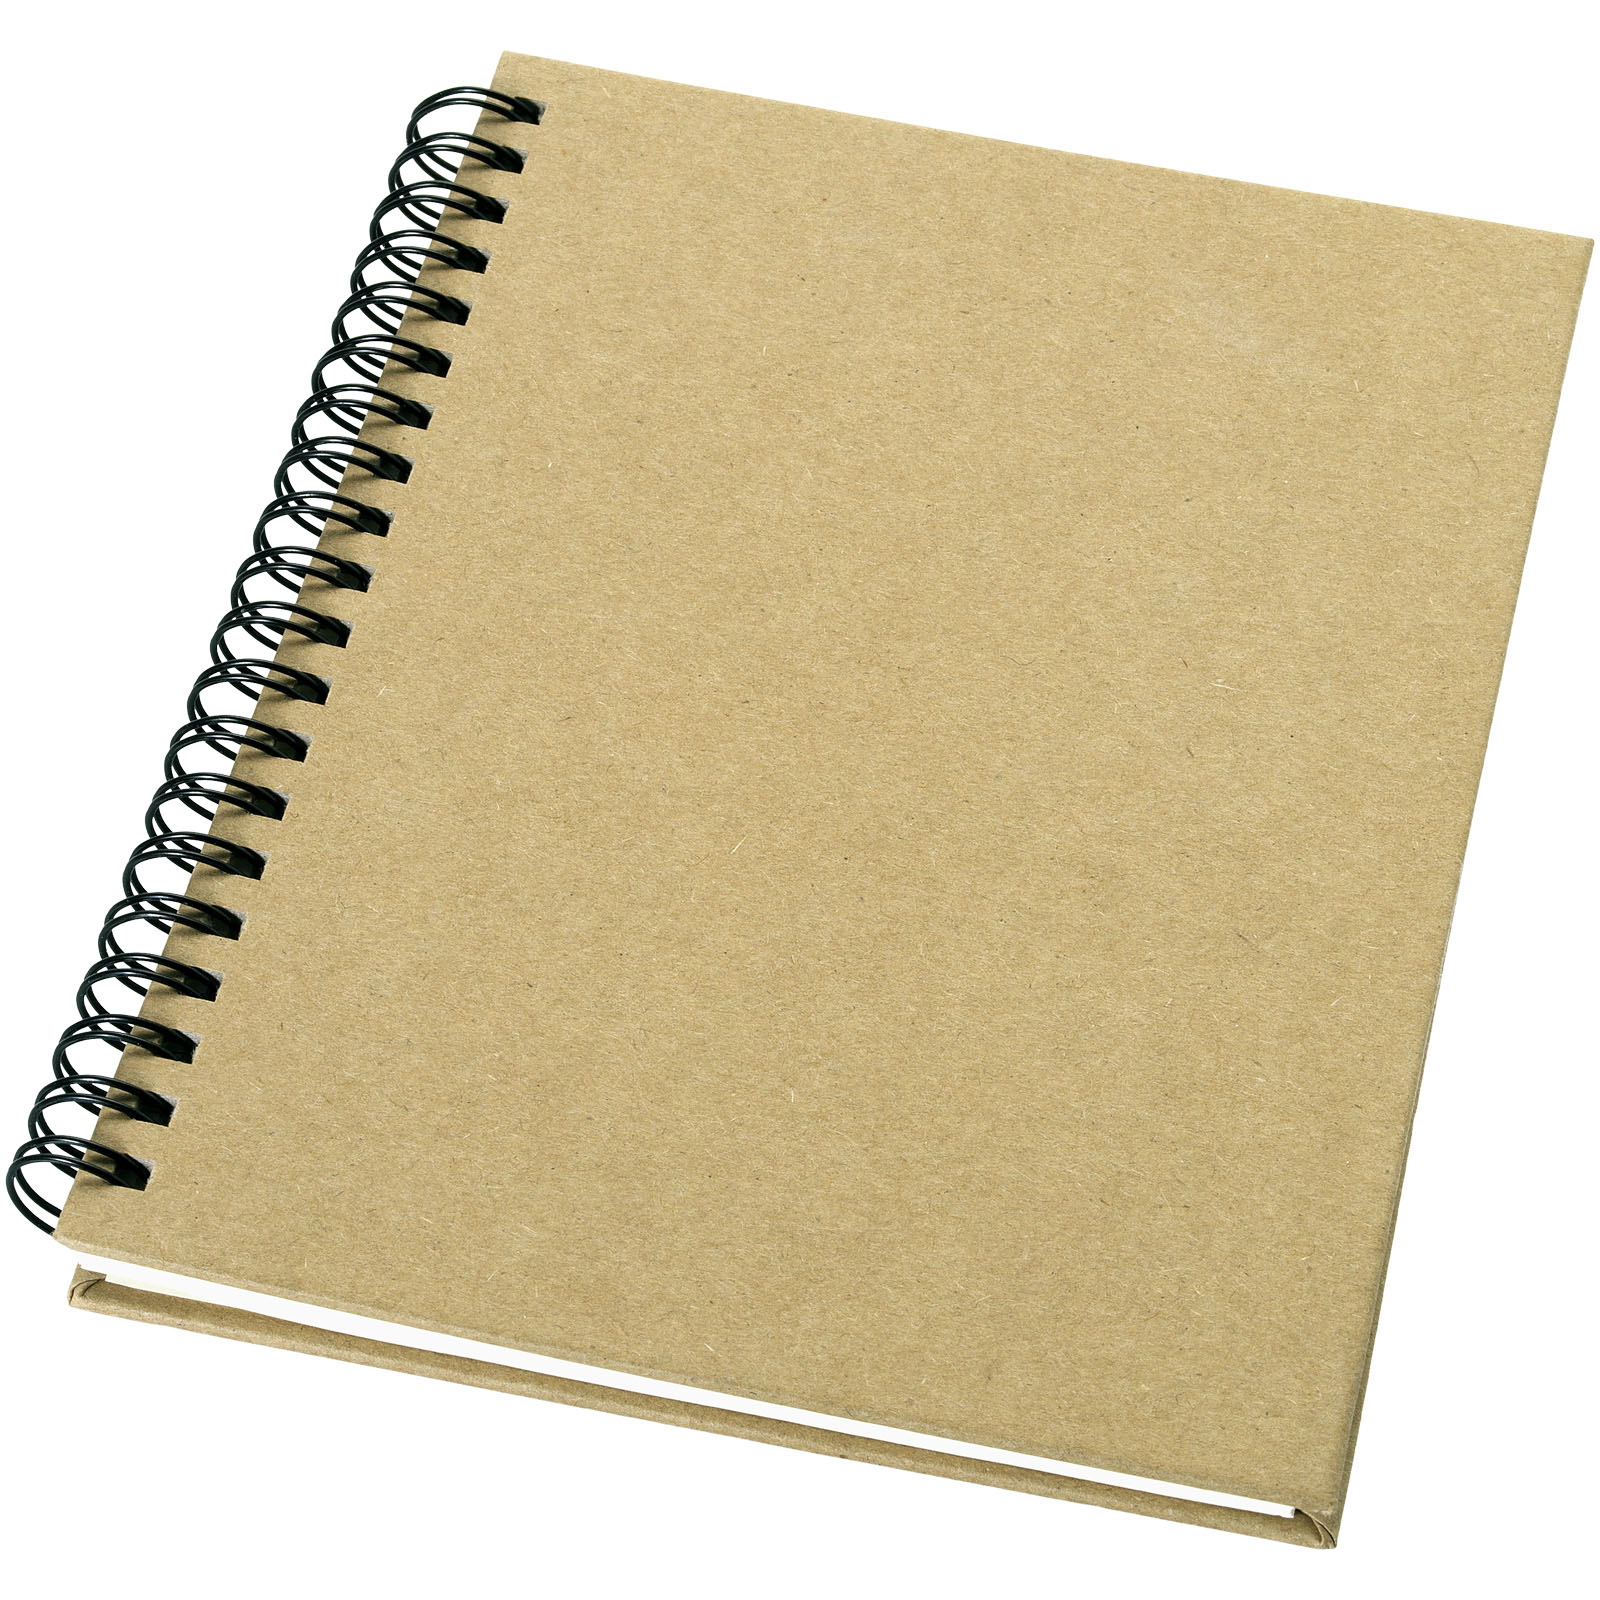 Cuaderno Reciclado Mendel - Oxford - Ortigueira